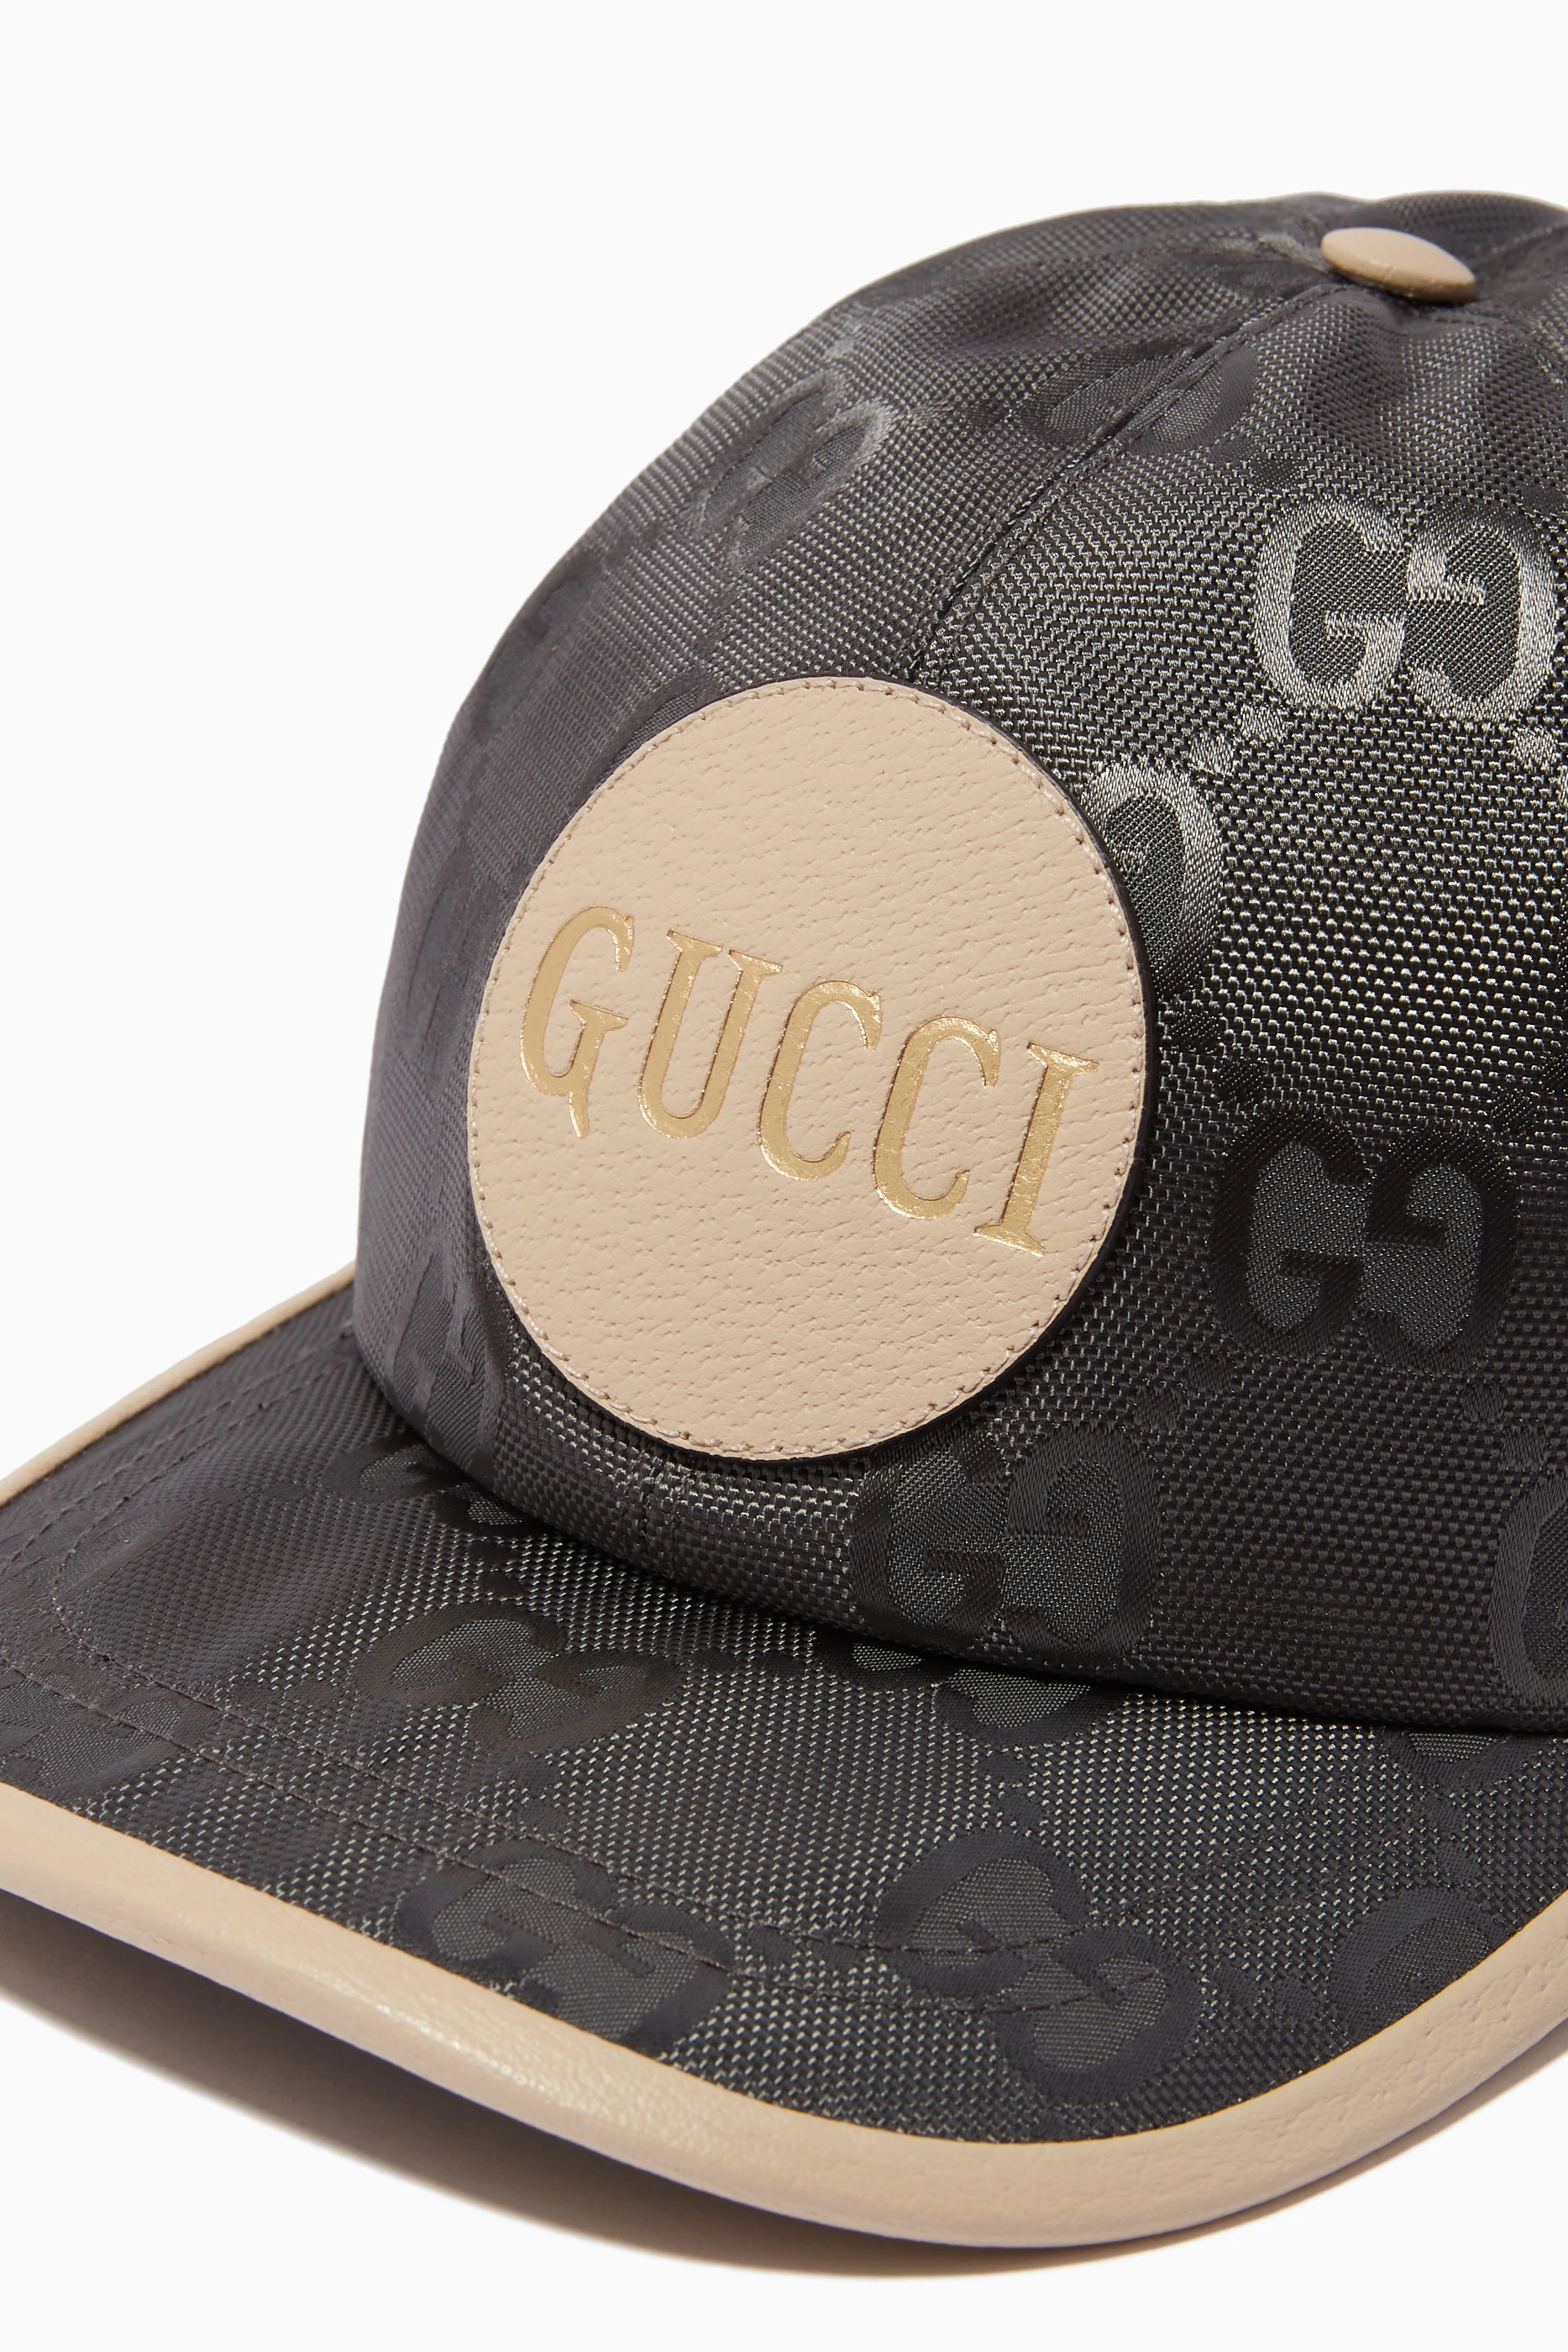 Gucci Off The Grid Baseball Hat Dark Grey in Econyl Nylon with